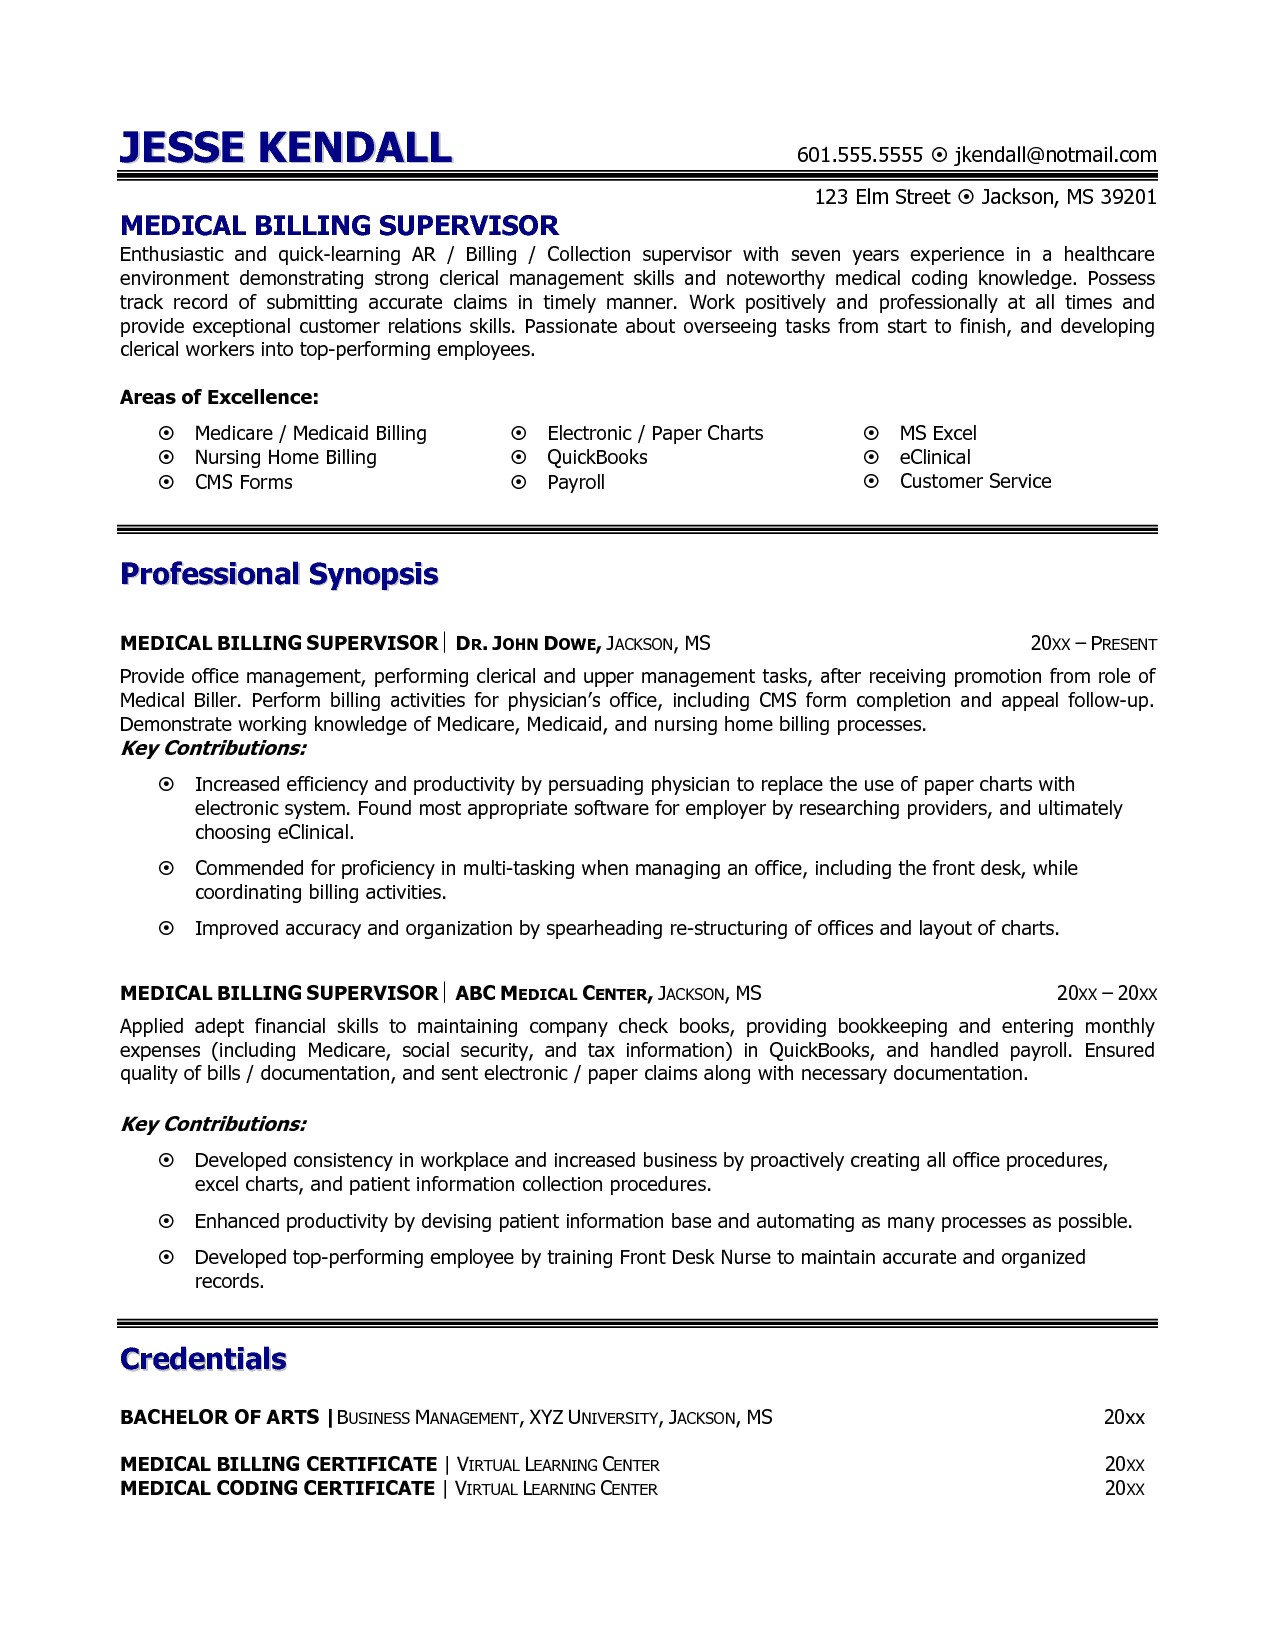 Sample Medical Billing Resume Templates Medical Billing and Coding Resume Example